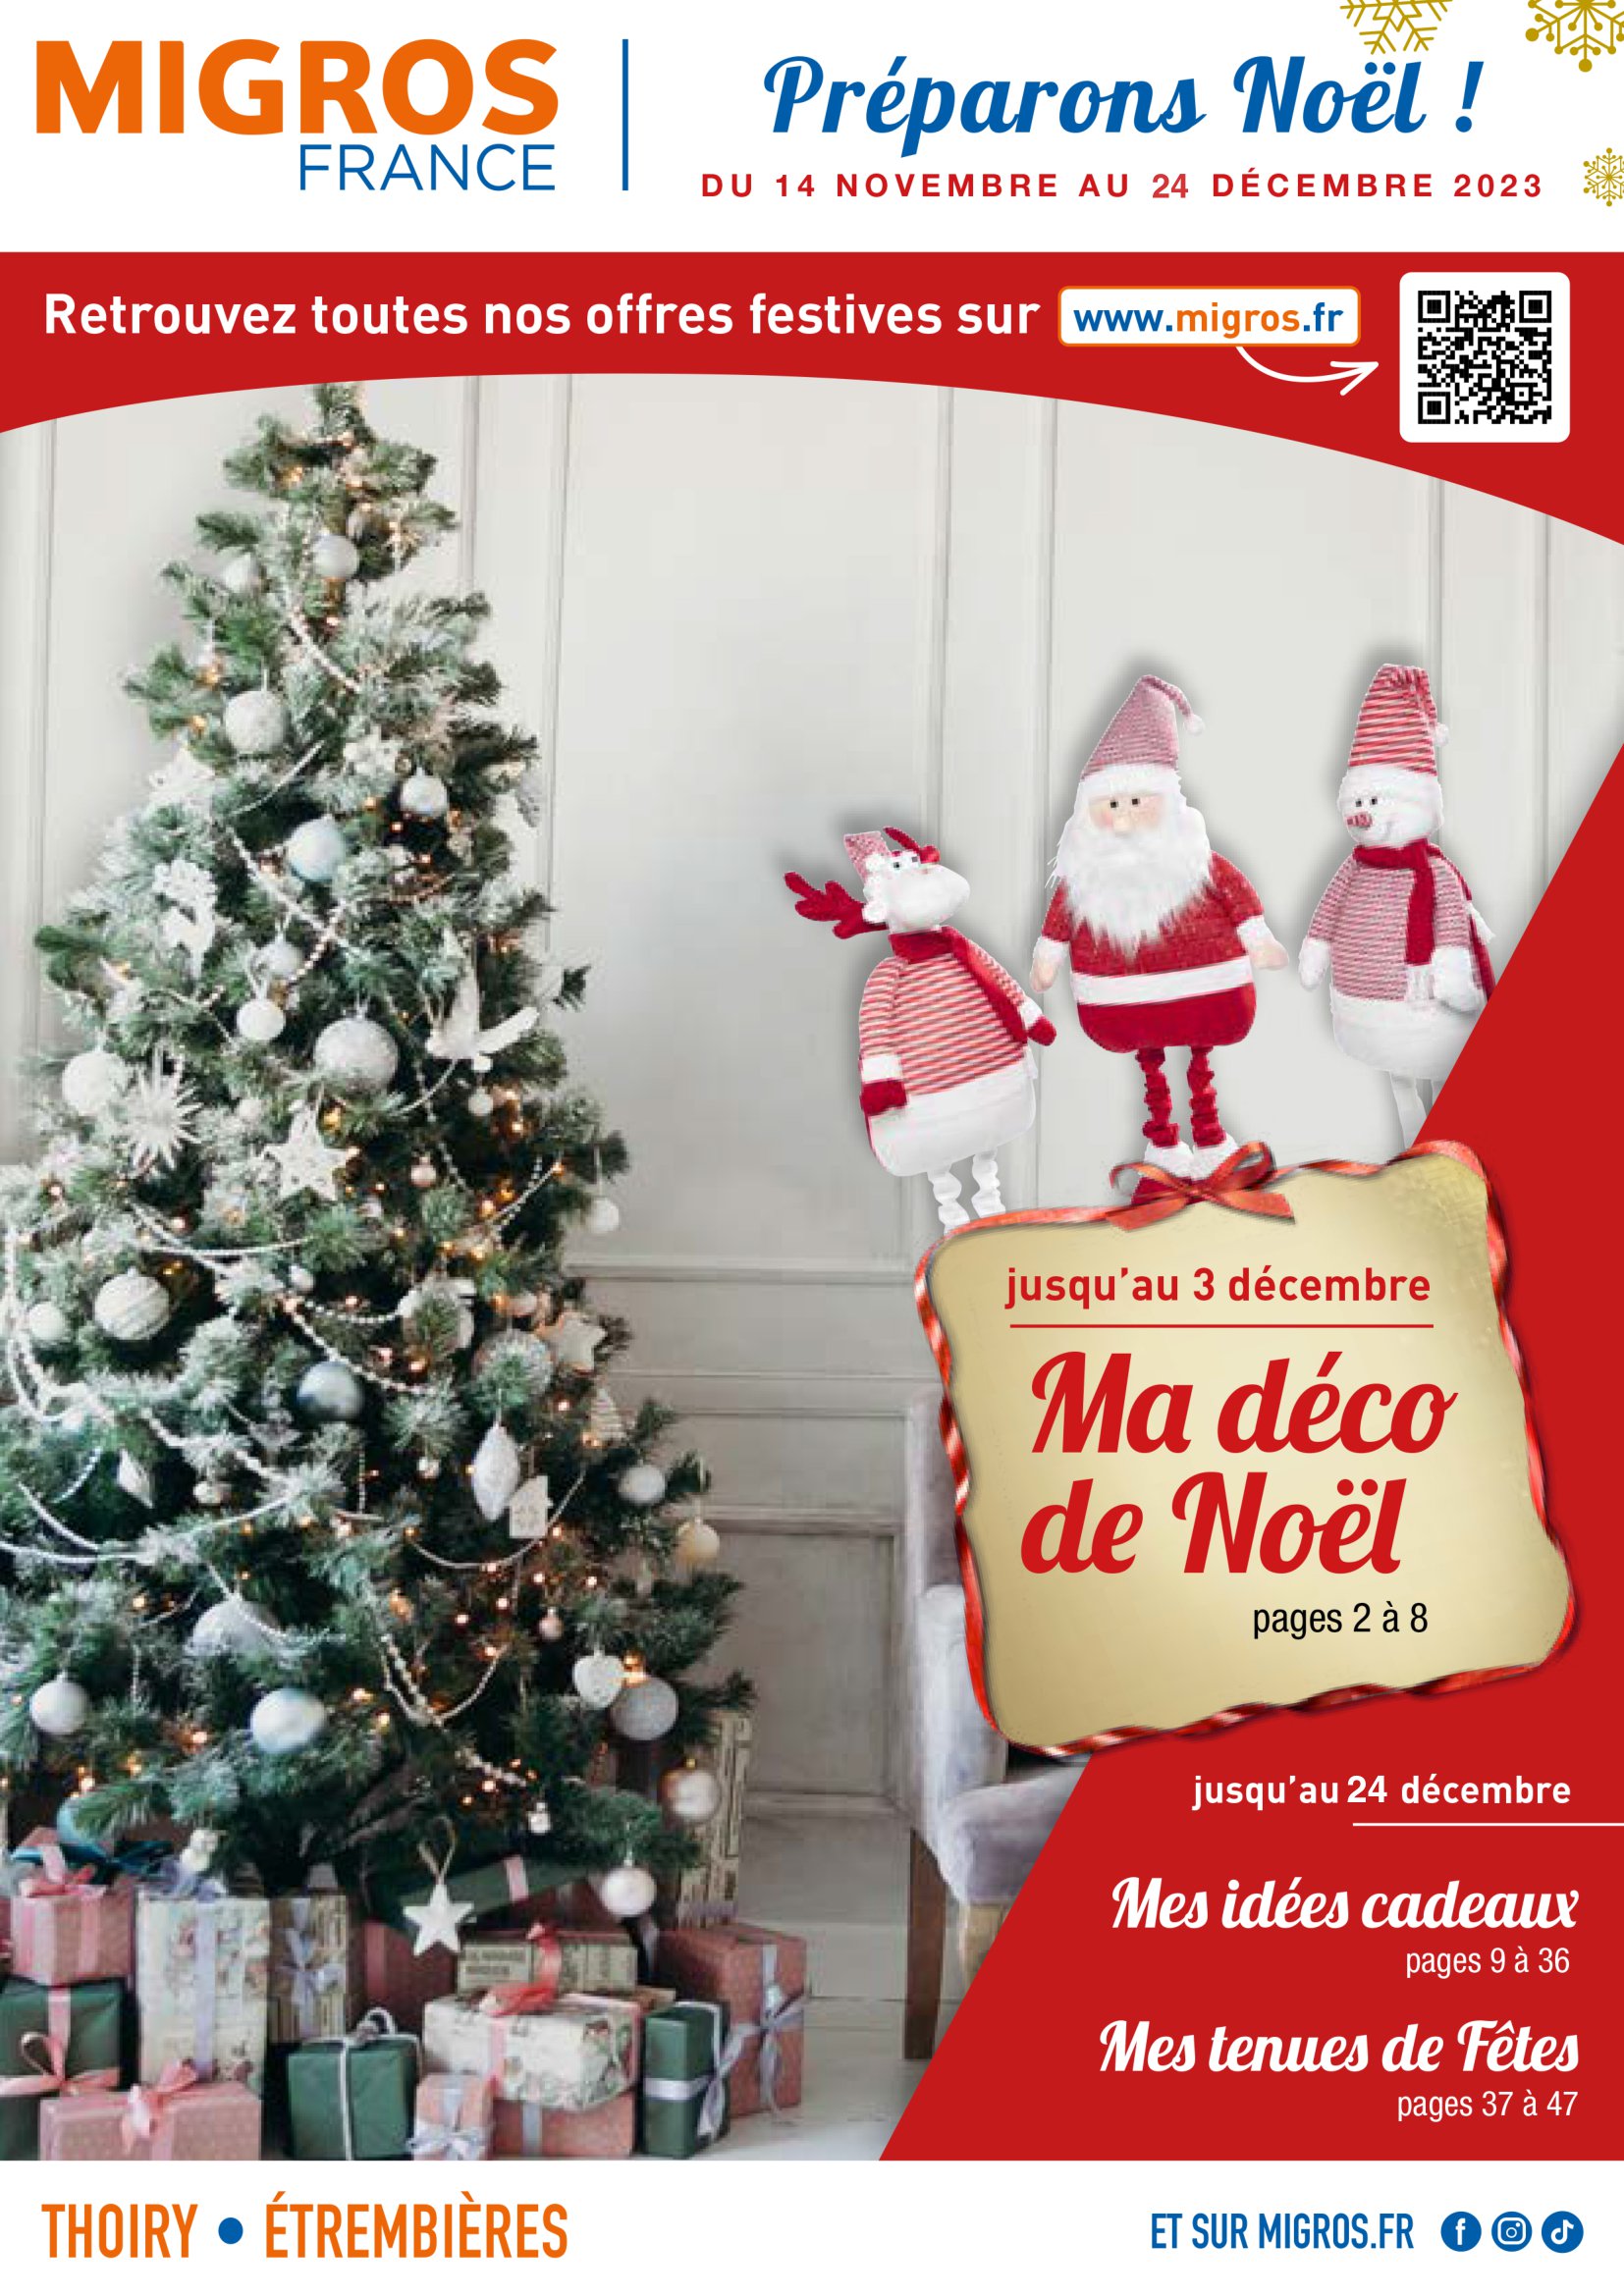 Catalogue Migros Noël 2023 1 – migros 14 24 01 1